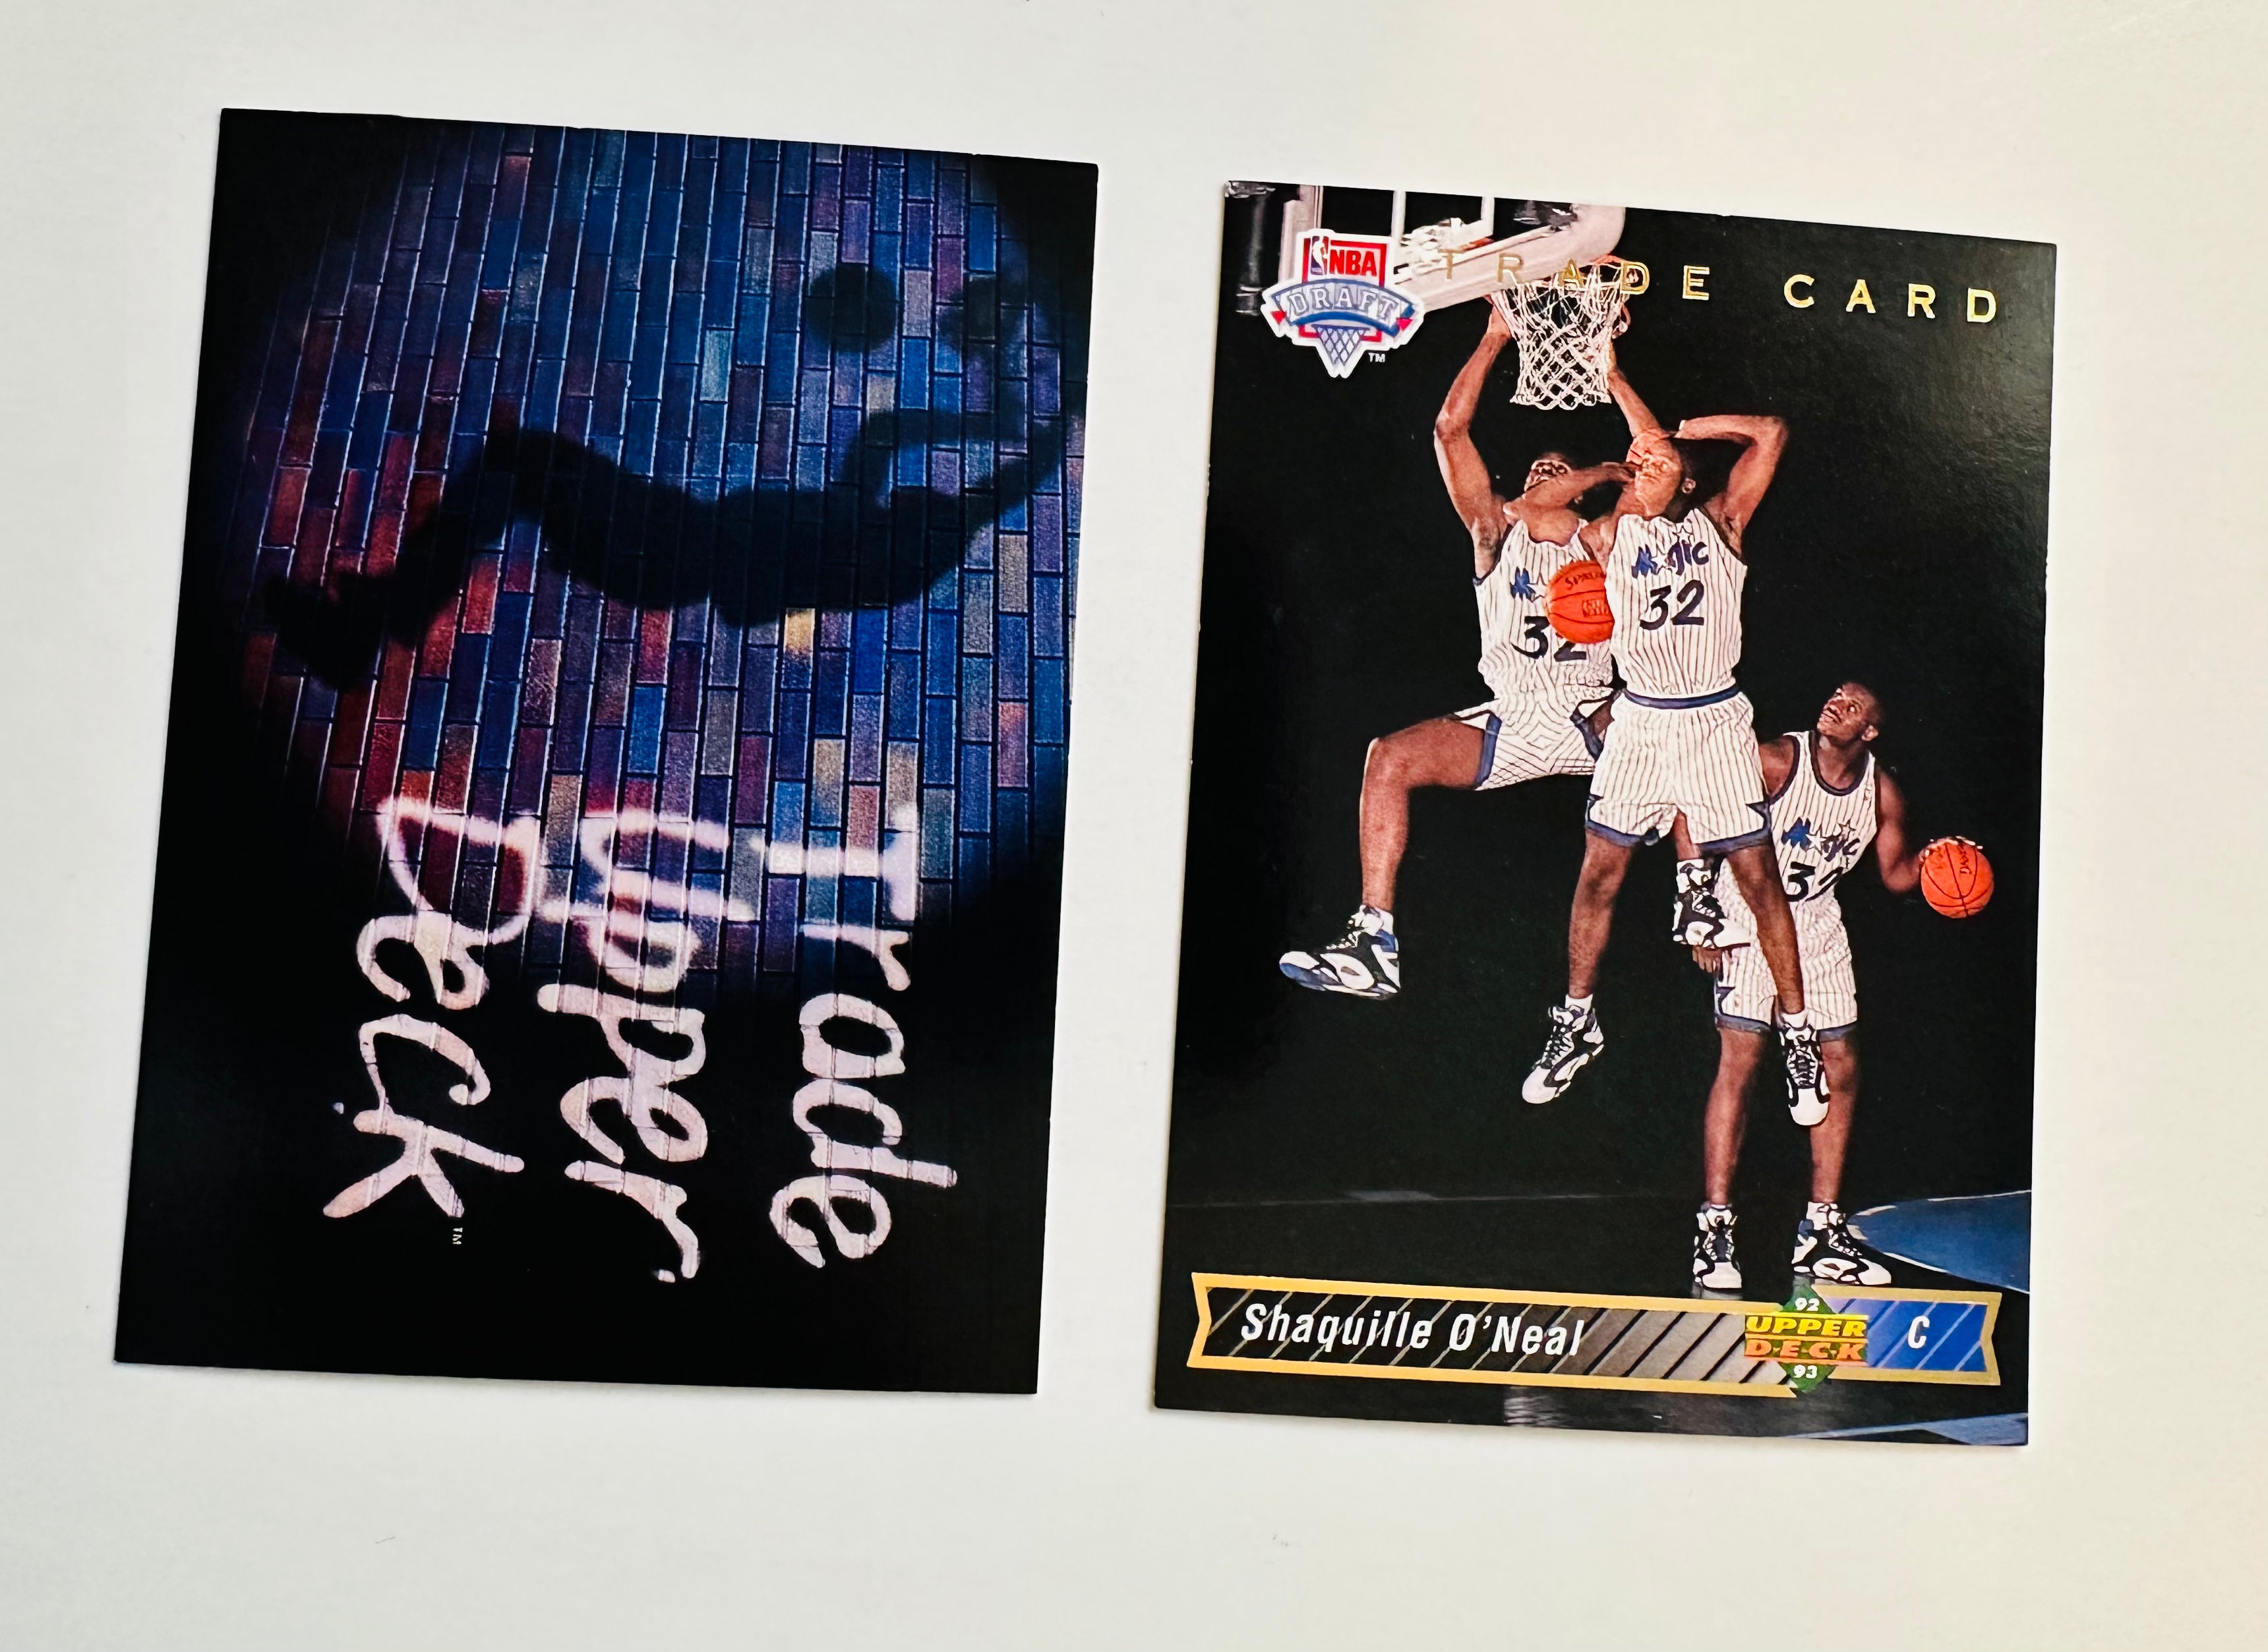 Shaq Upper Deck 1B basketball rookie card with rare redemption card 1992